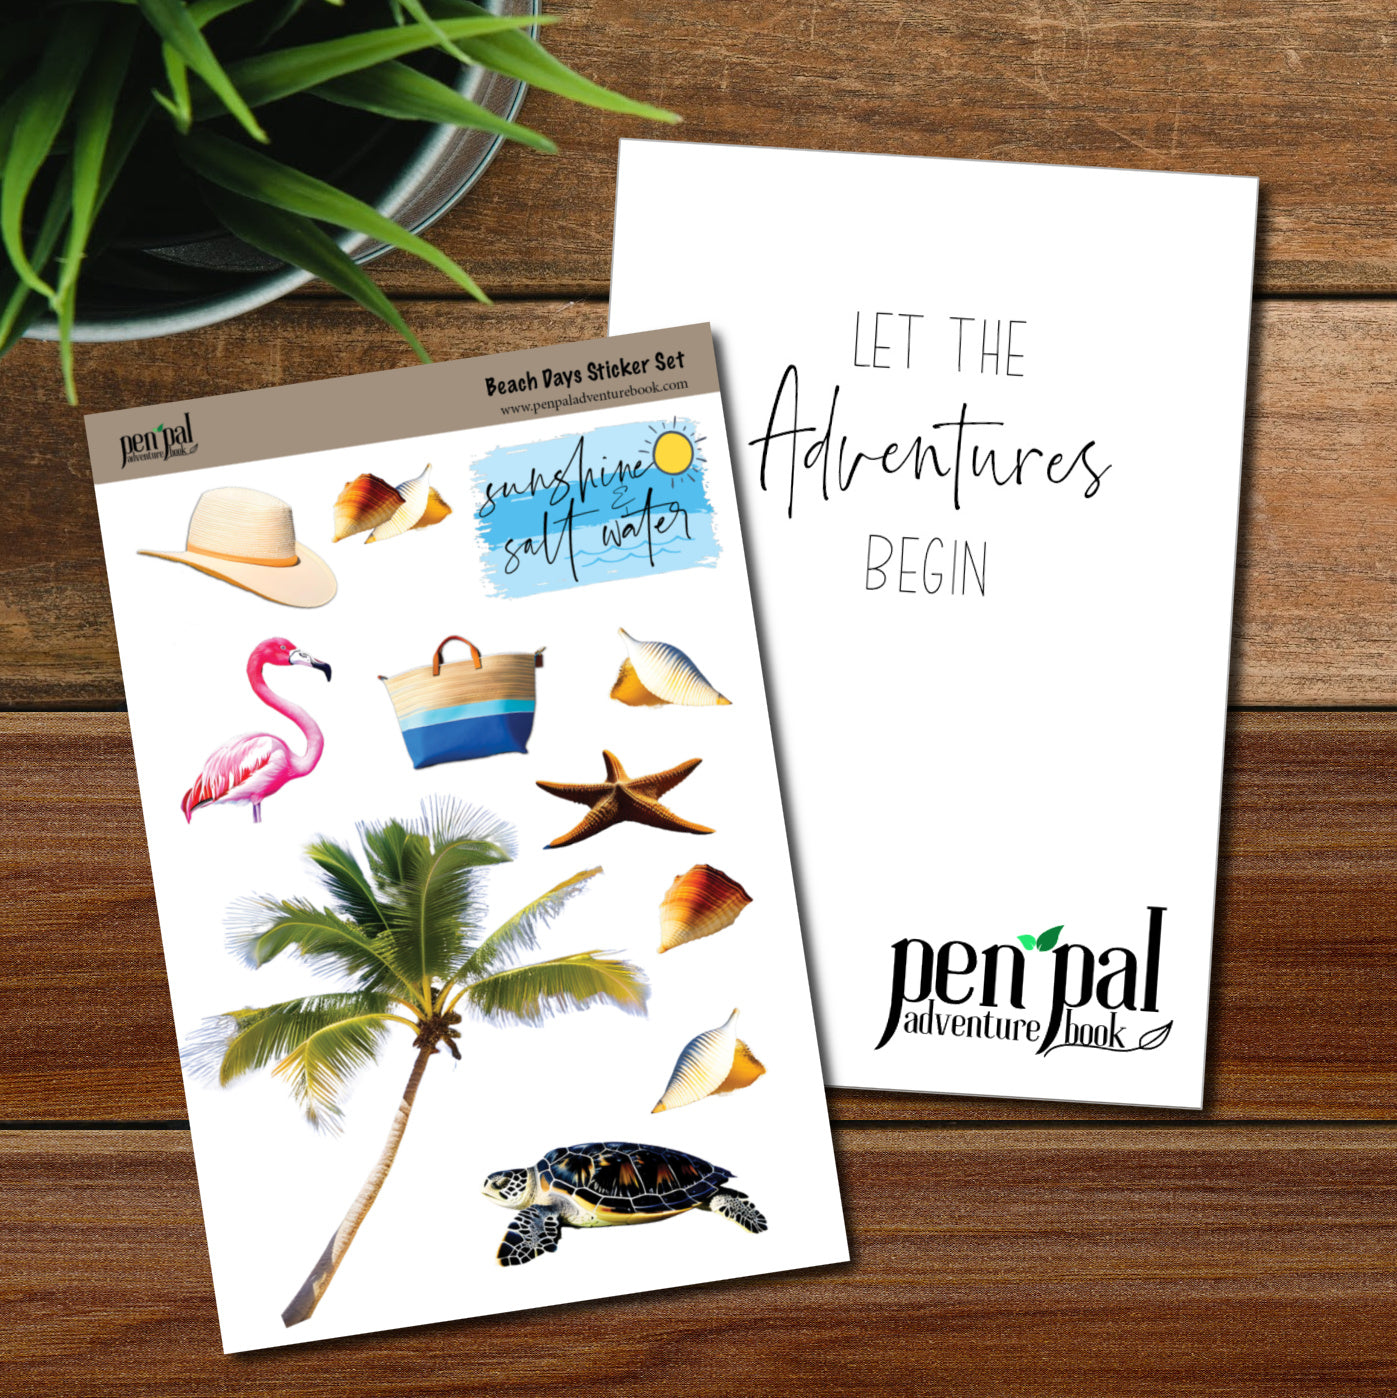 WHOLESALE-Pen Pal Adventure Book with Beach Days Sticker Set of 5 Kits